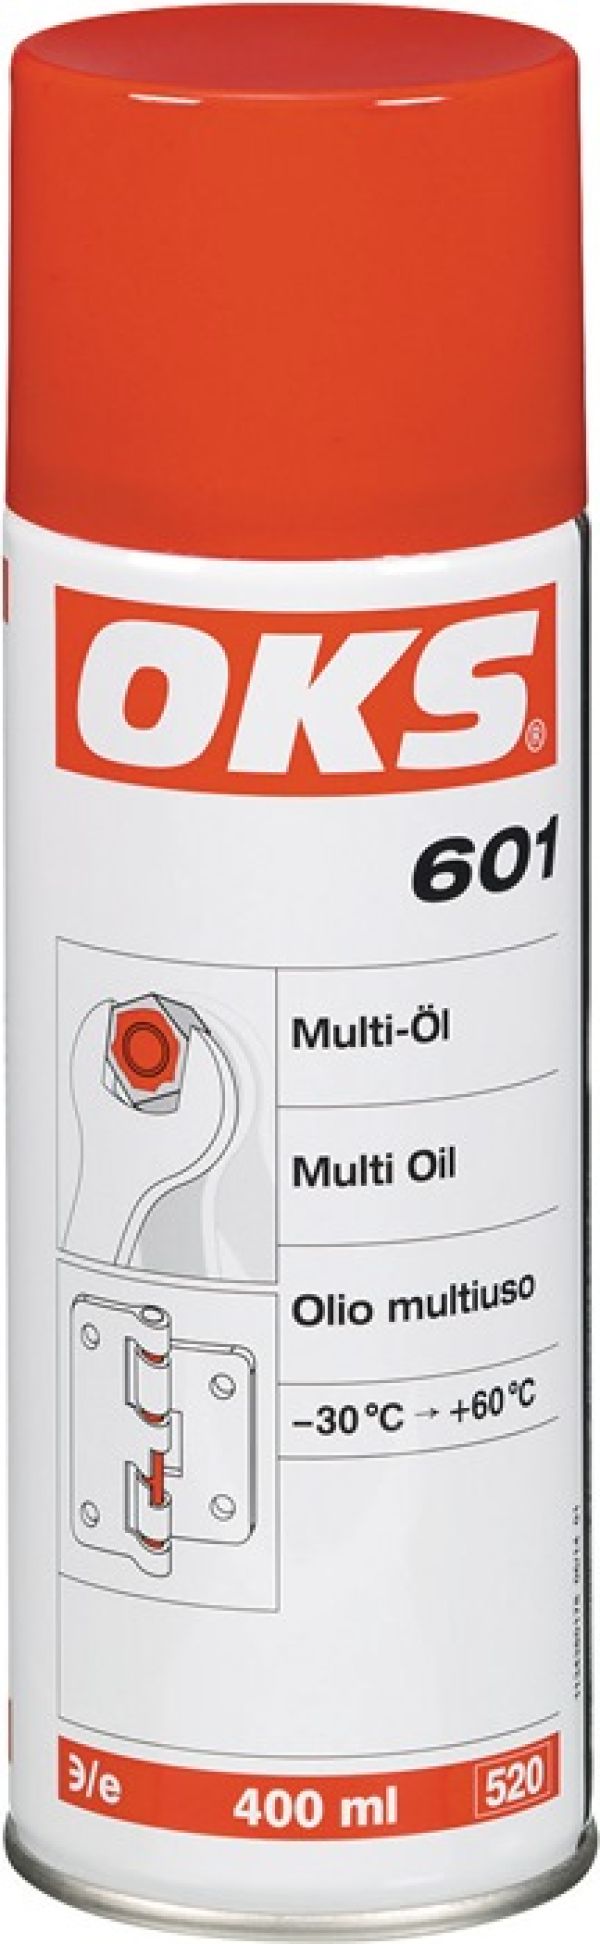 Multiöl OKS 601 400ml Spraydose OKS